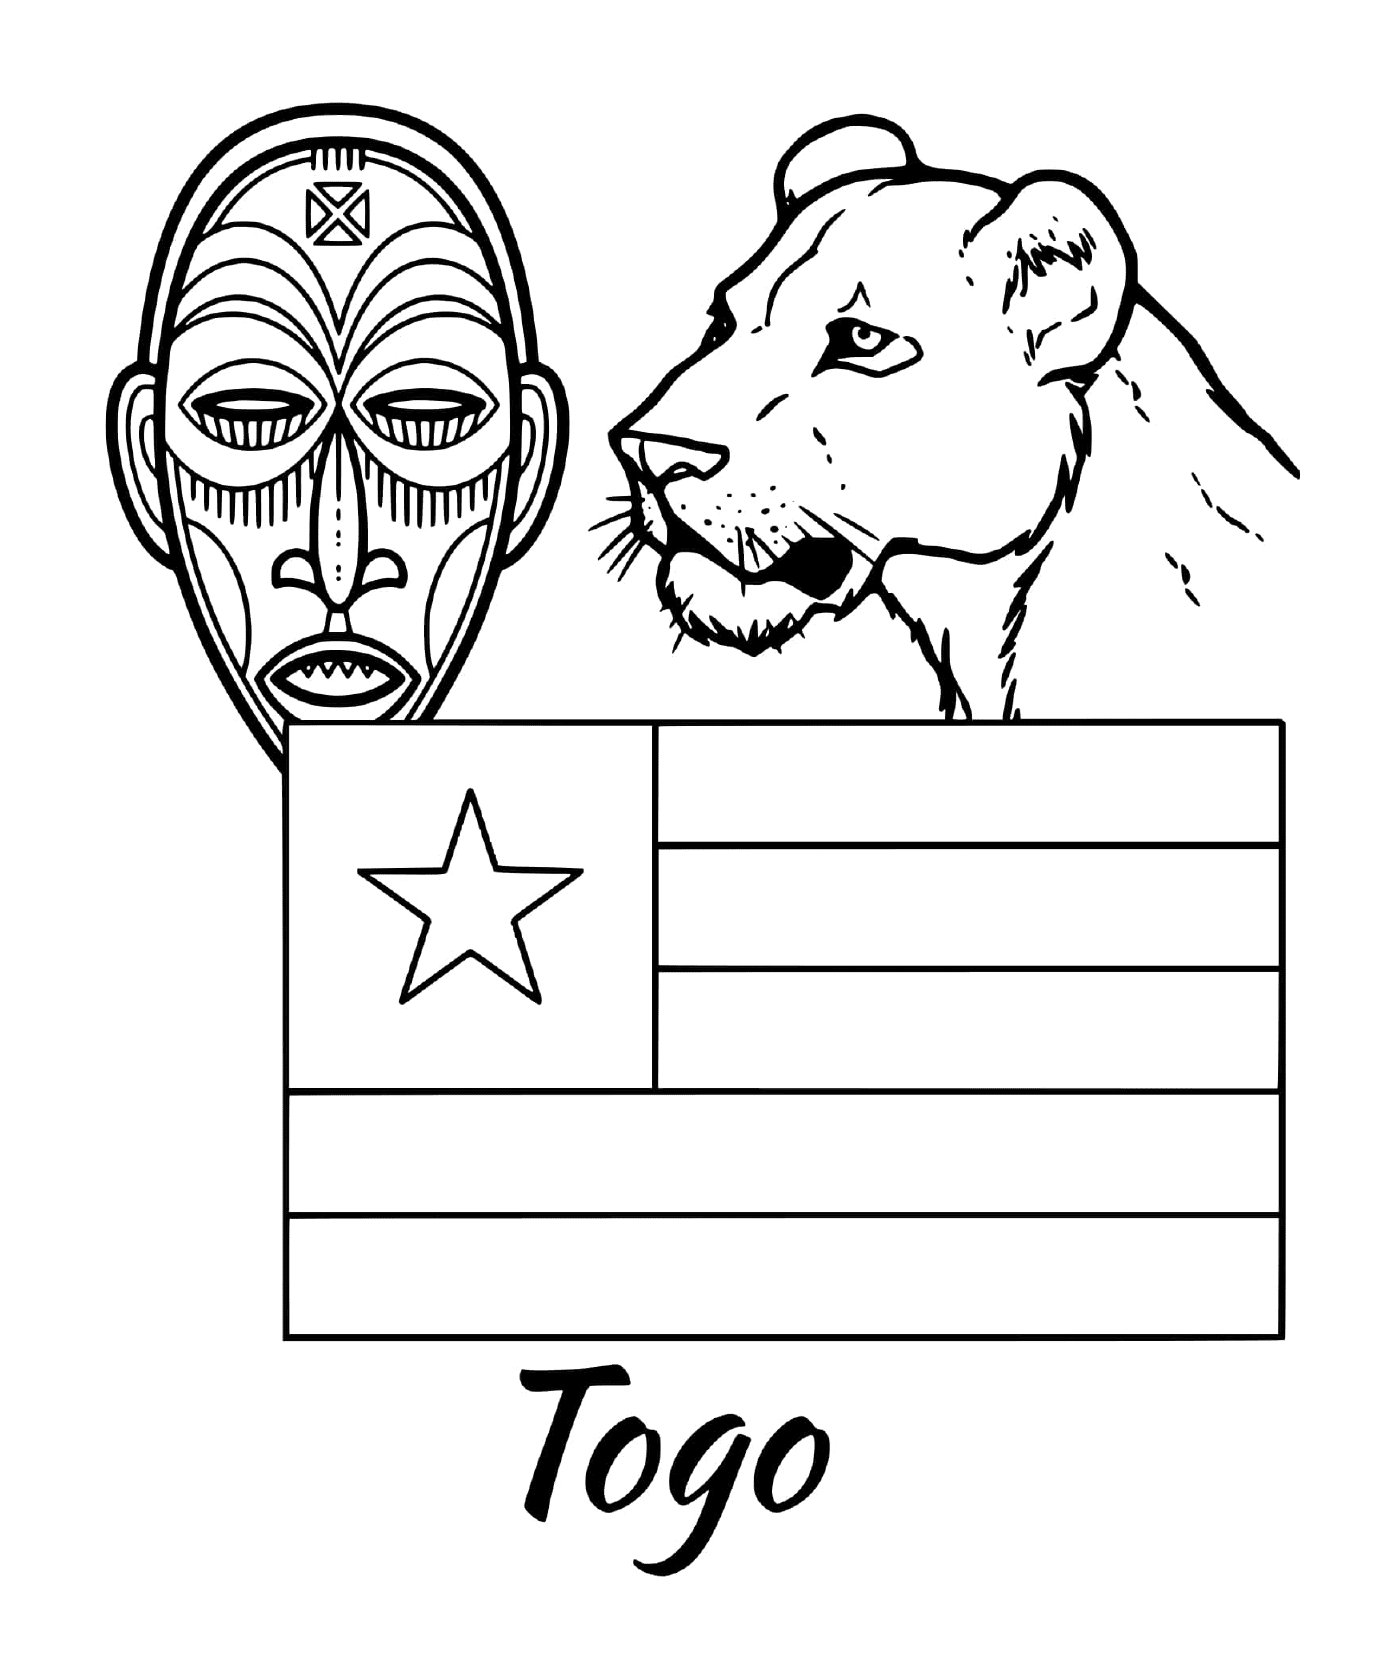  Bandiera Togo con maschera tribale 